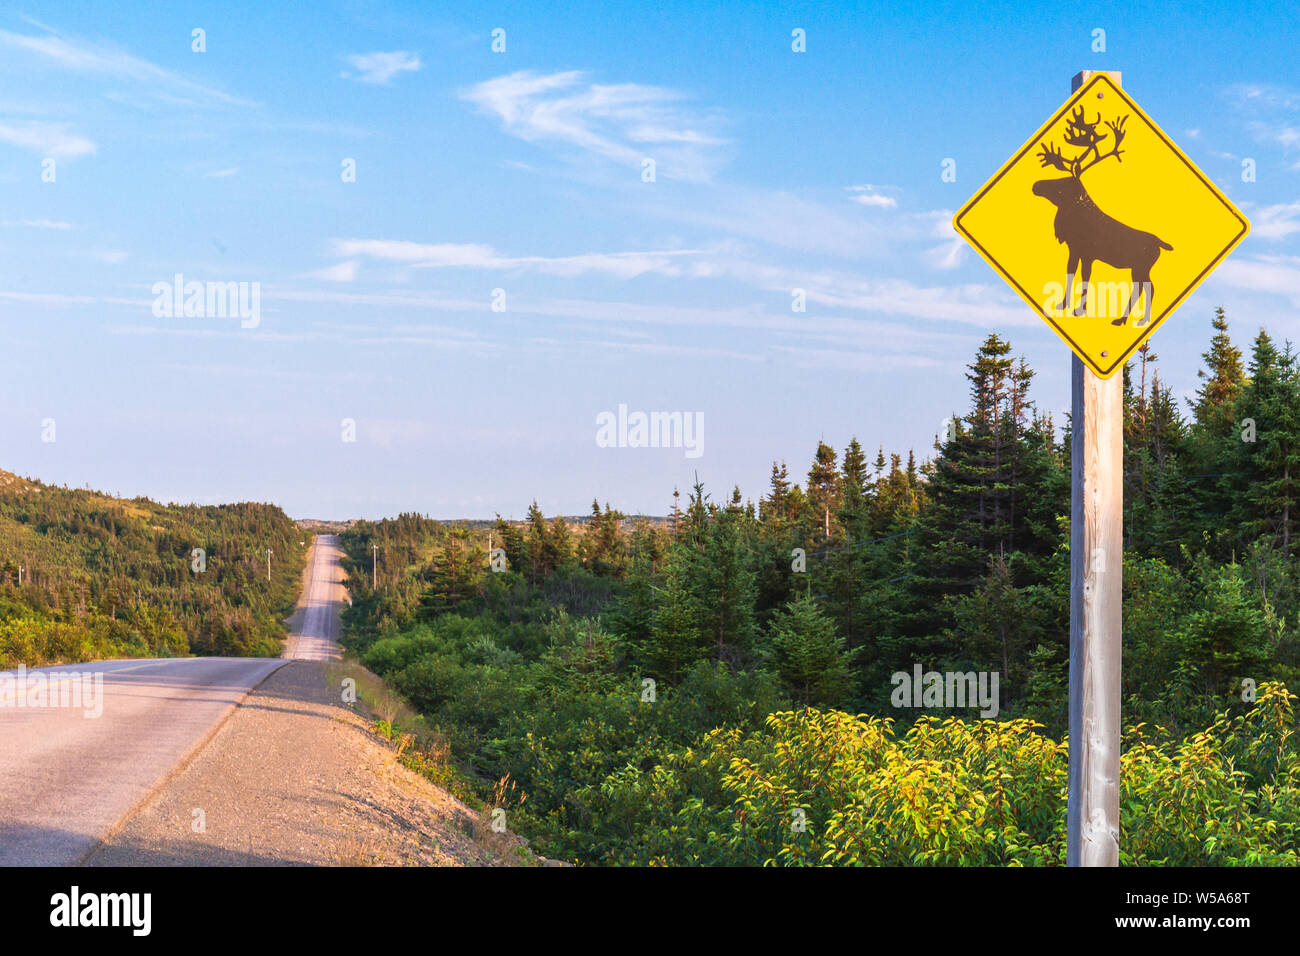 Moose crossing road sign, Terre-Neuve, Canada Banque D'Images